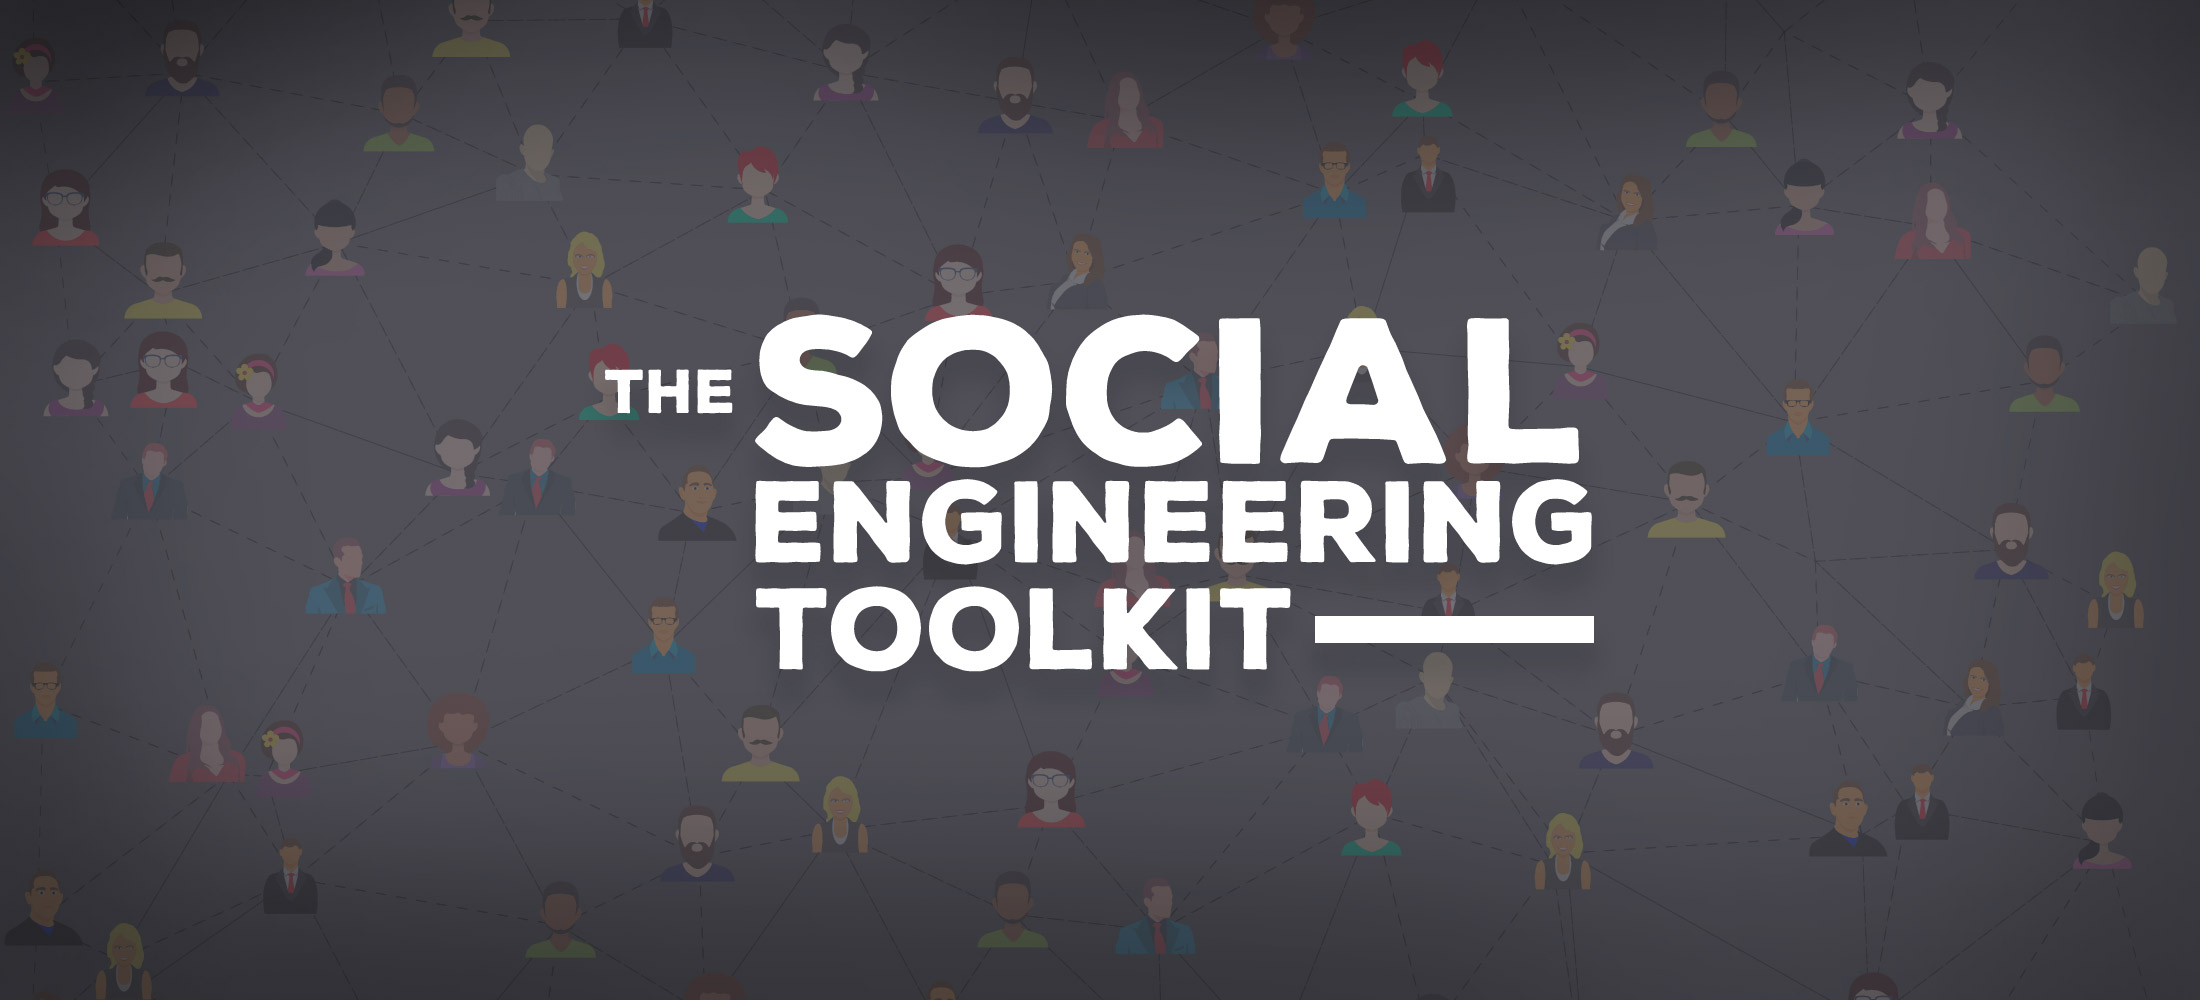 social engineering toolkit set